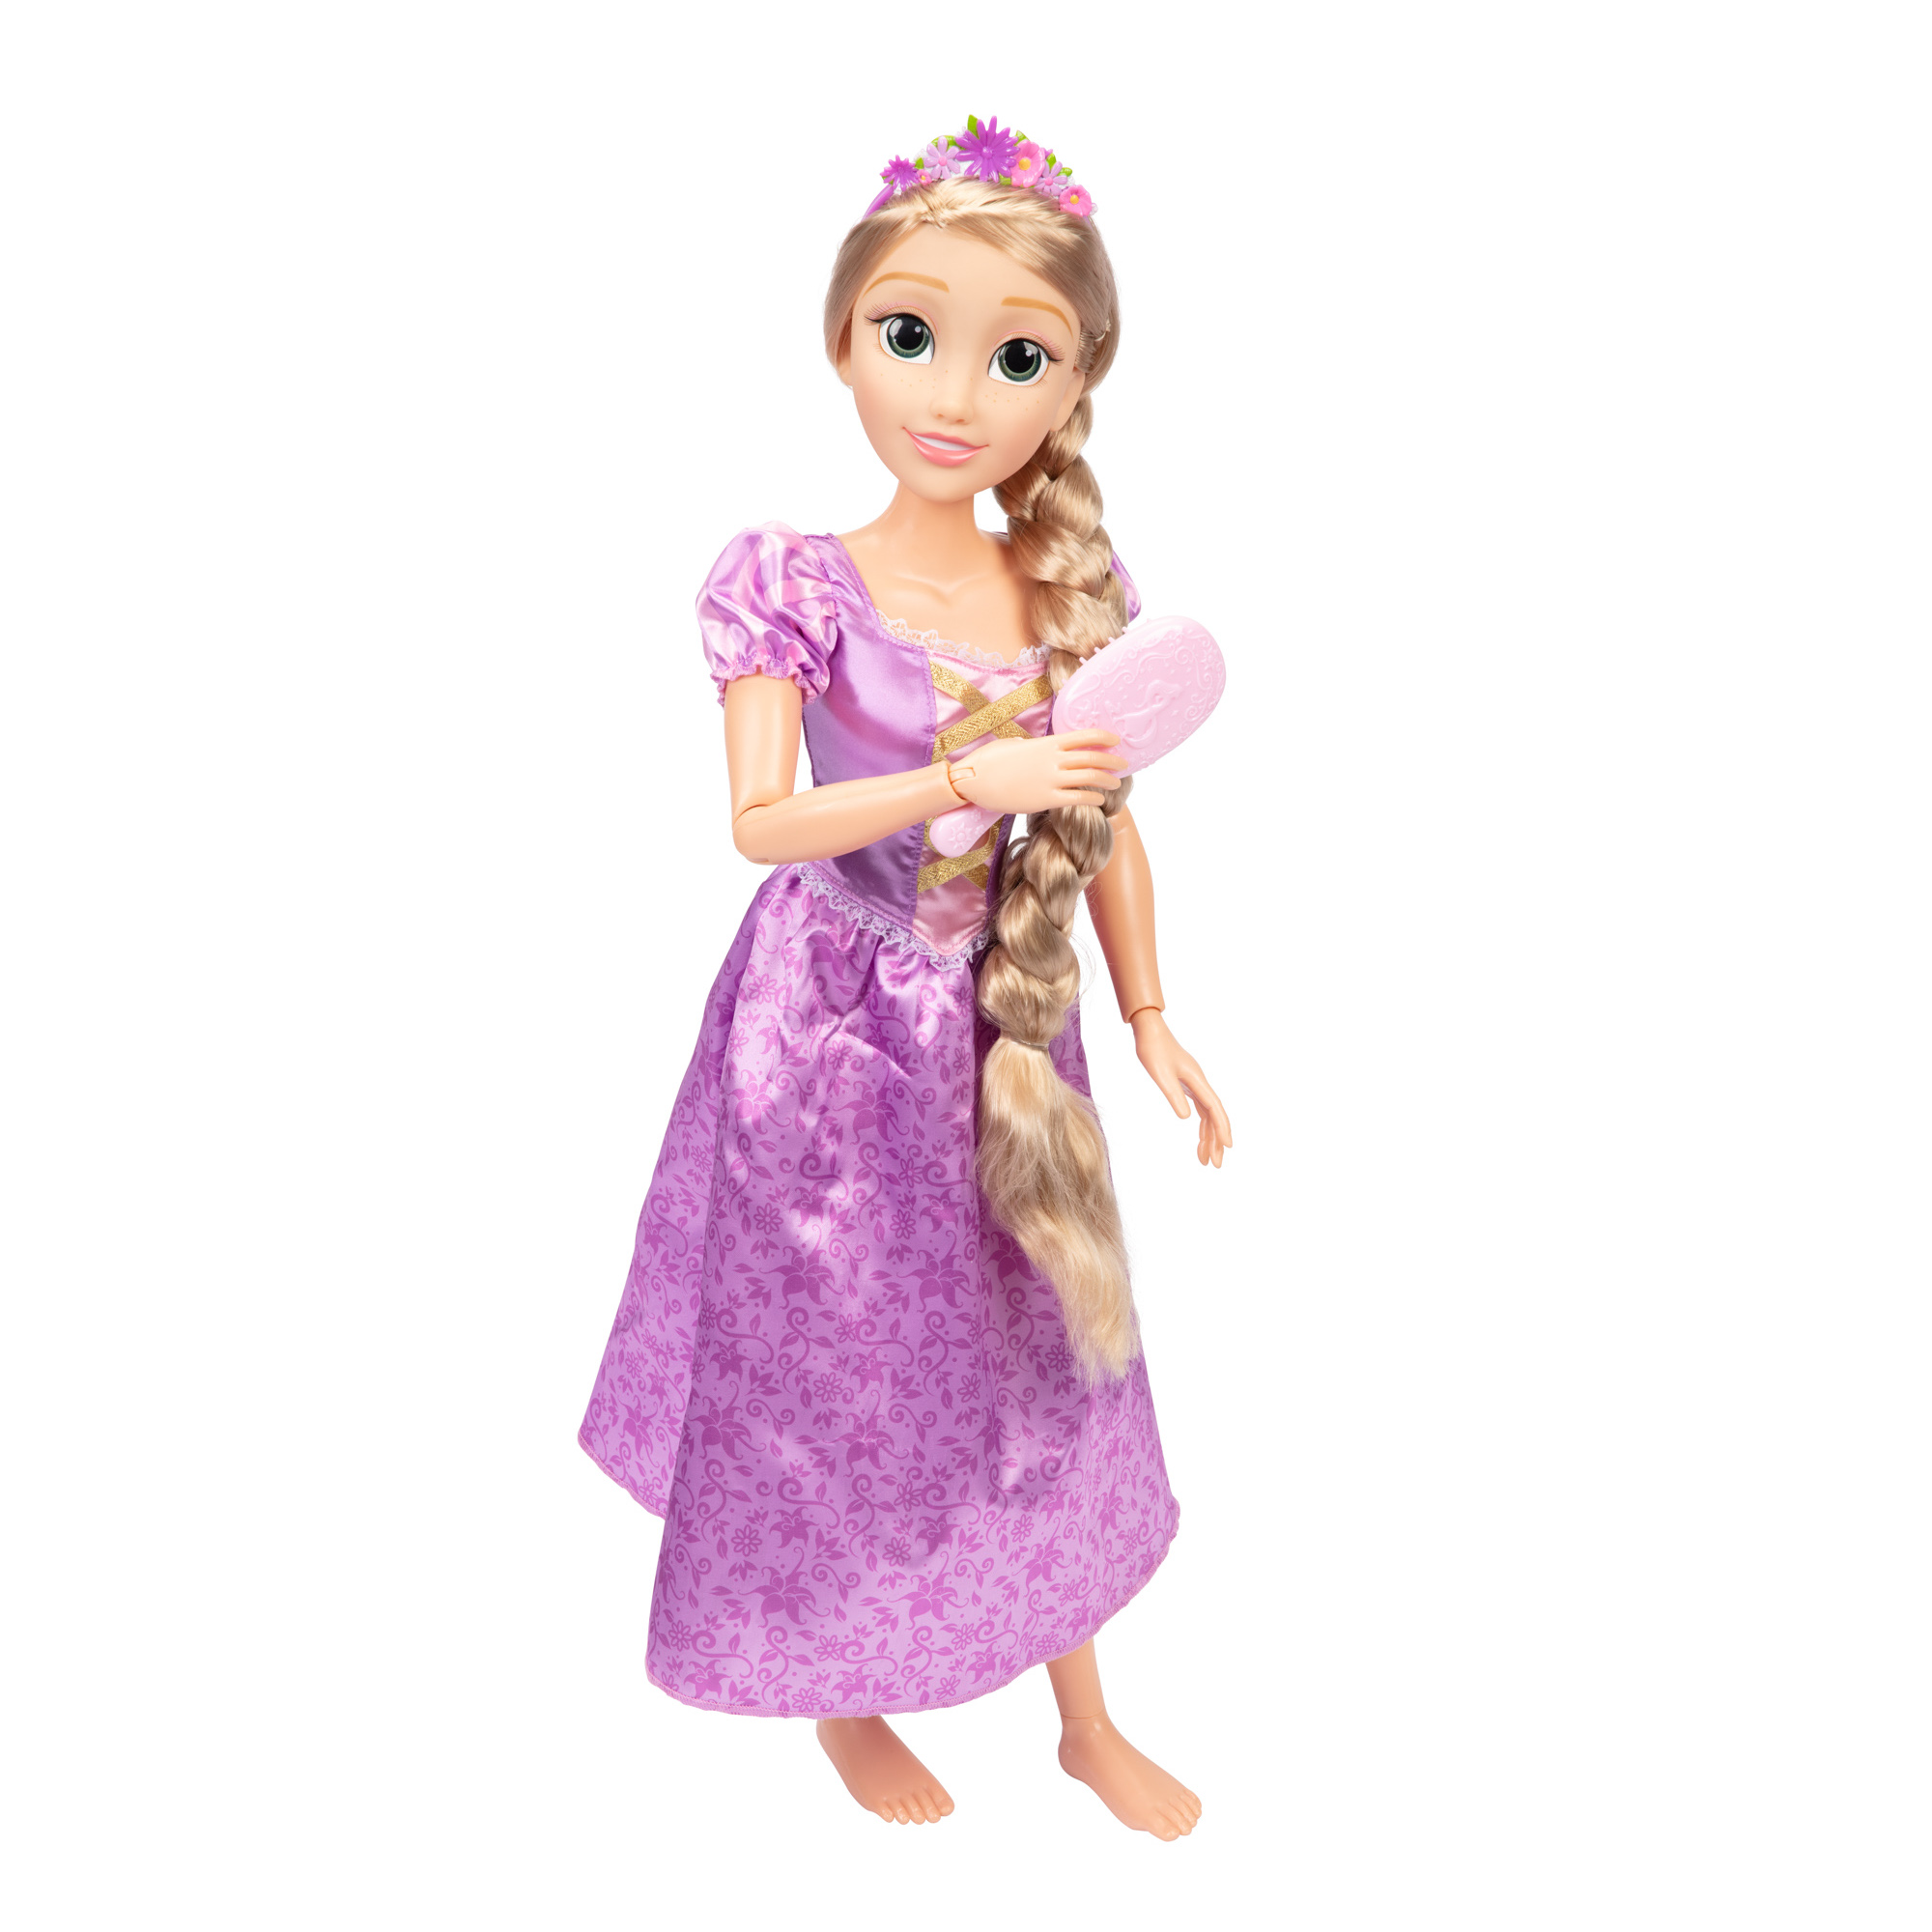 Princesas Disney 7 cm. Mini Toddler Gift Set 6 Piezas Jakks 73256